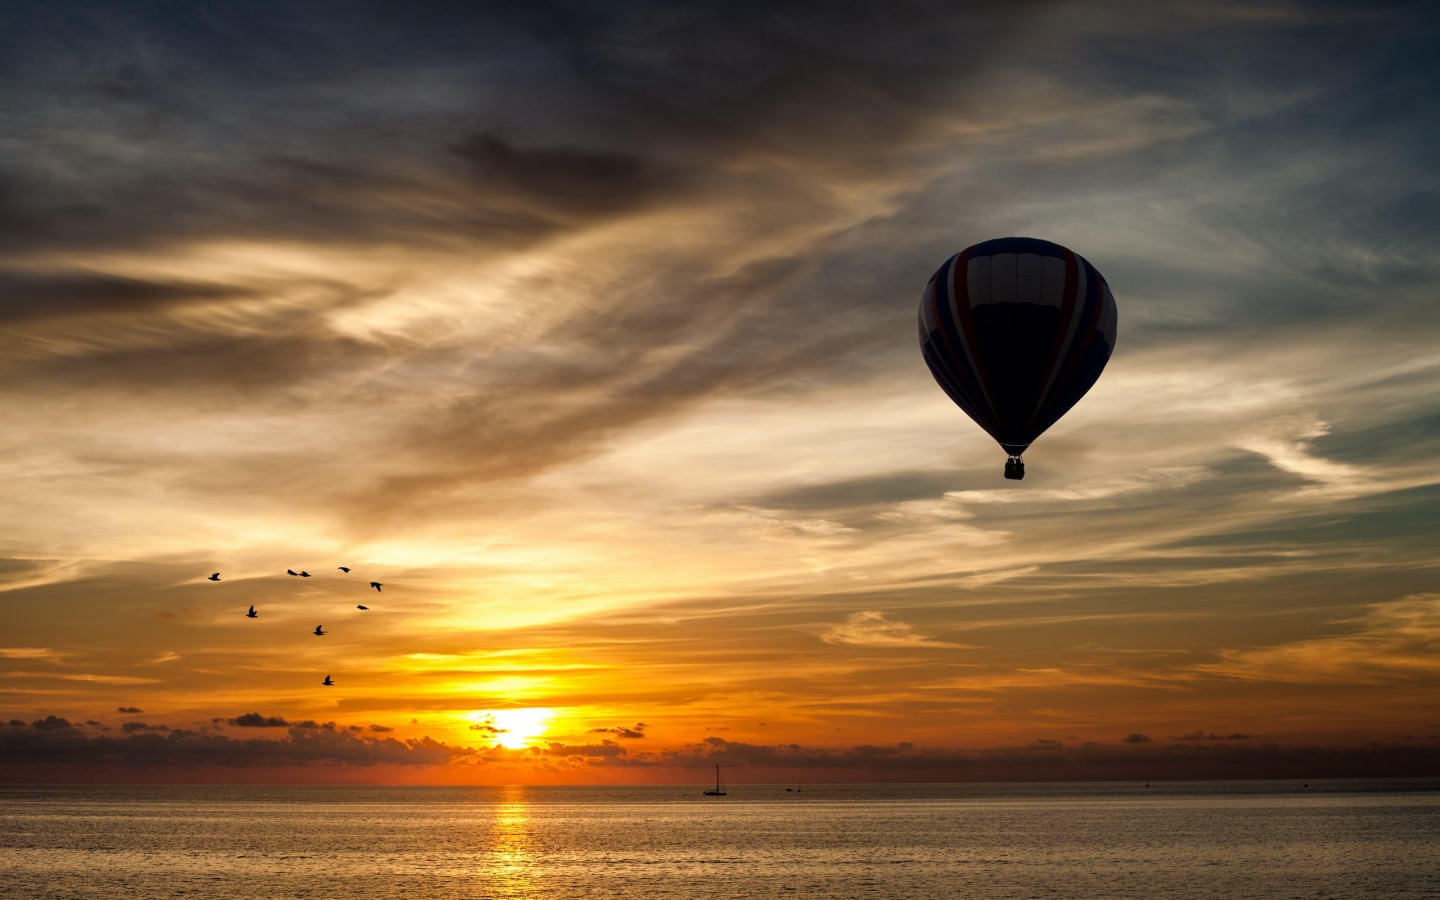 Balloon Towards Sunset for 1440 x 900 widescreen resolution